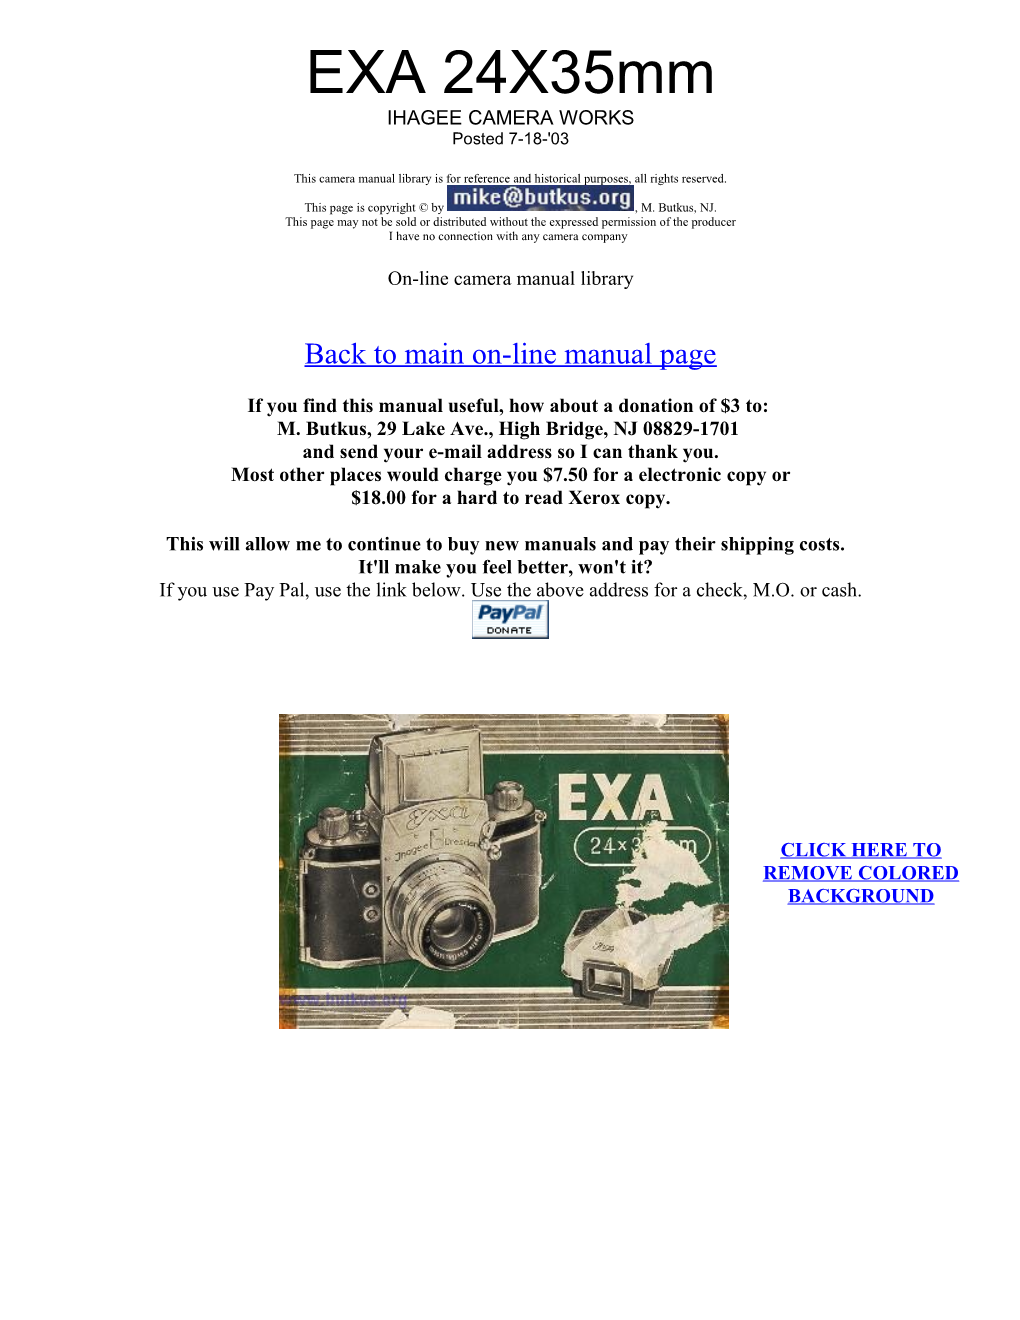 EXA 24X35mm IHAGEE CAMERA WORKS Posted 7-18-'03